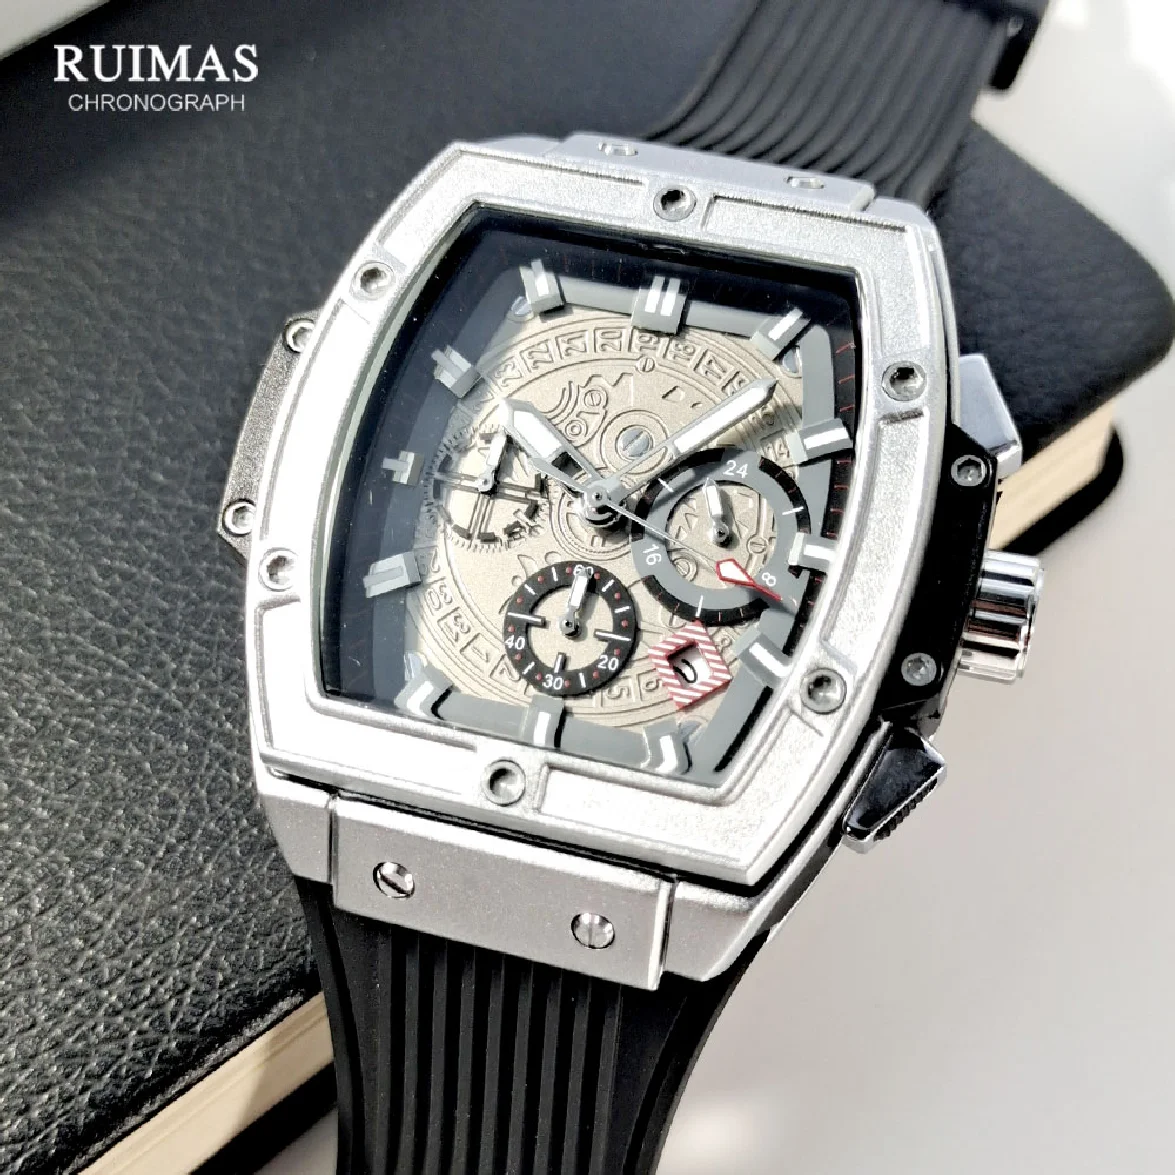 

RUIMAS Chronograph Quartz Watches for Men Fashion Military Sport Silicone Strap Wristwatch with Date 24-hour Luminous Hands 333